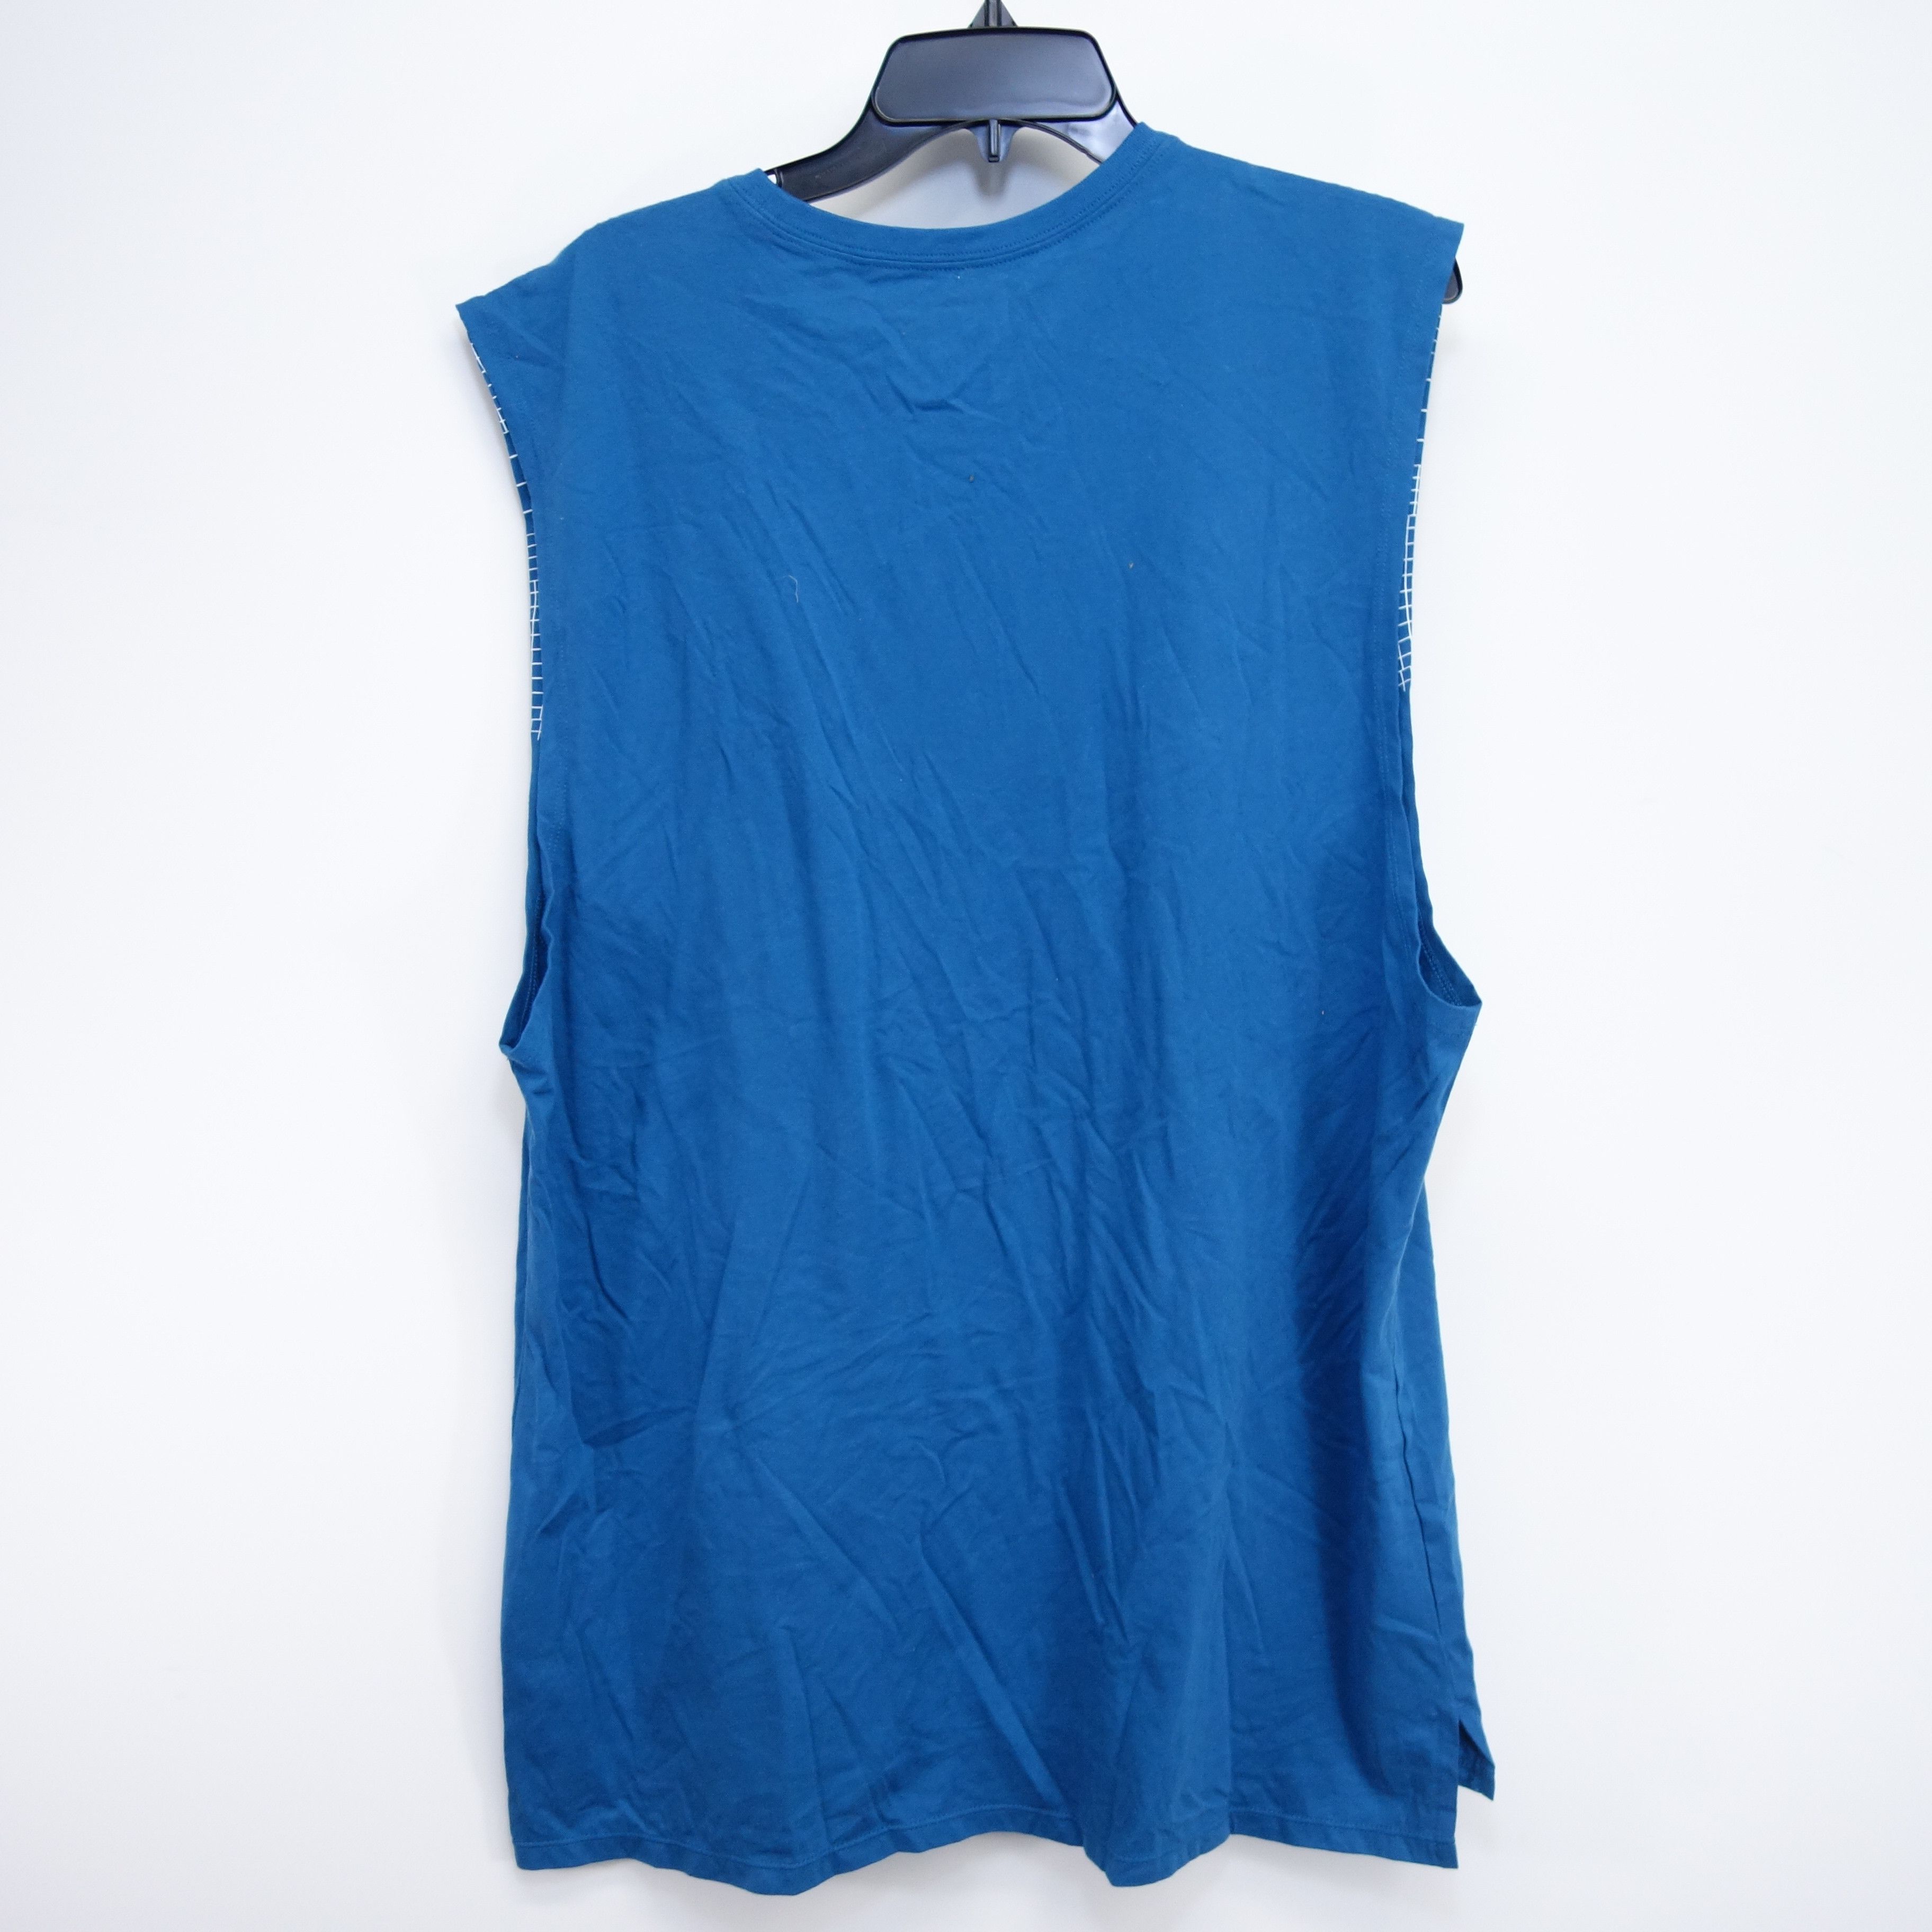 Nike Blue Tank Top Air Jordan Sleeveless Shirt Size XL Size US XL / EU 56 / 4 - 4 Preview